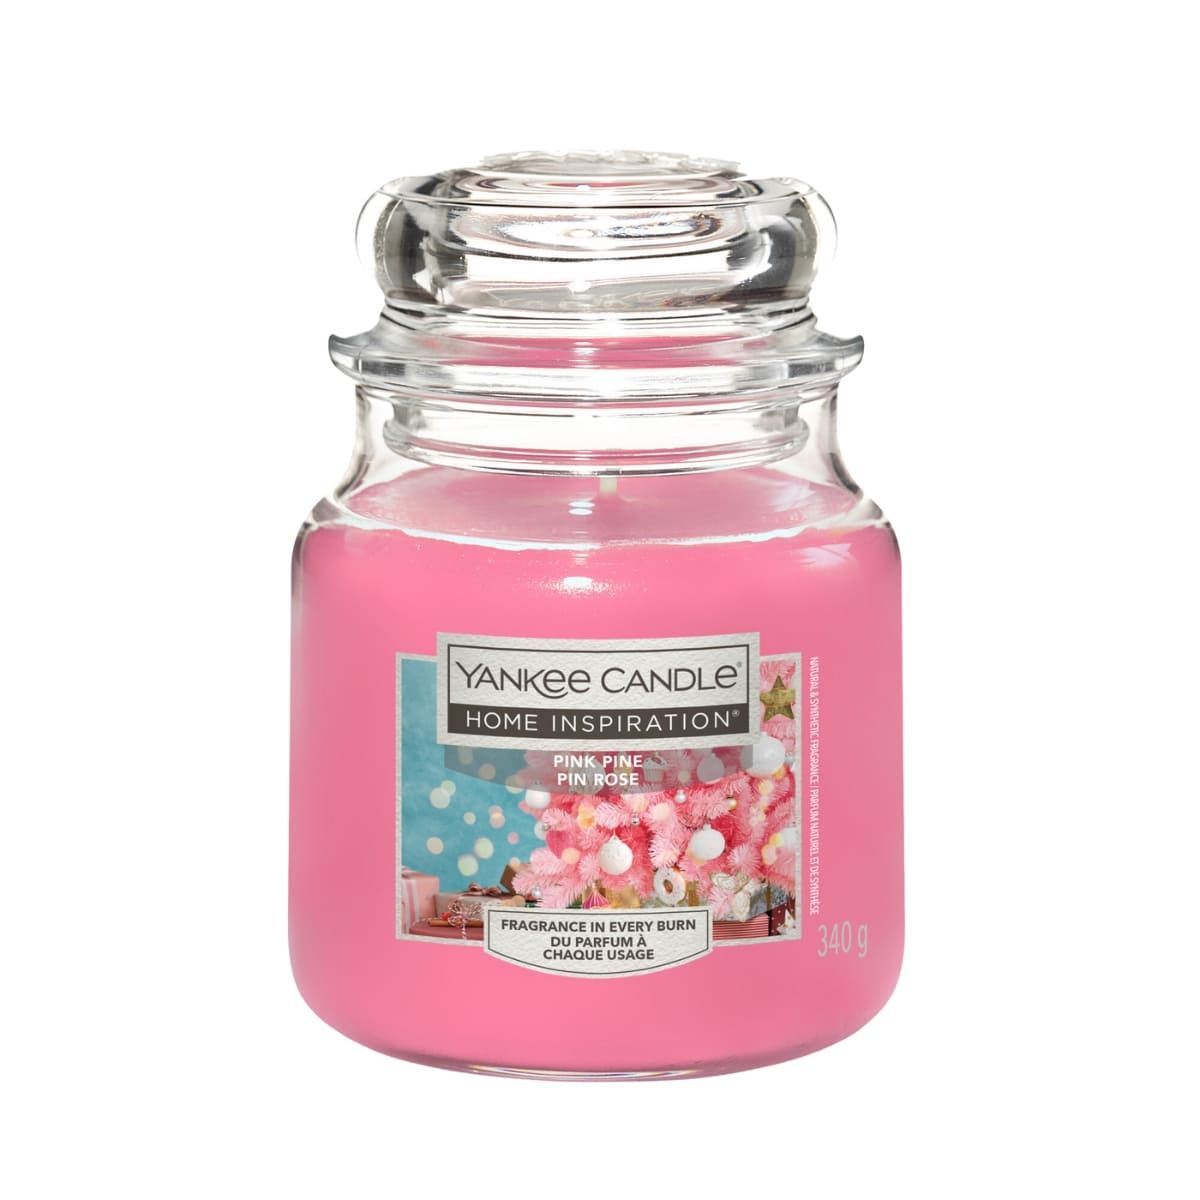 Ароматическая Свеча Yankee Candle Home Inspiration Pink Pine, 340 гр ароматическая свеча yankee candle home inspiration pink pine 538 гр